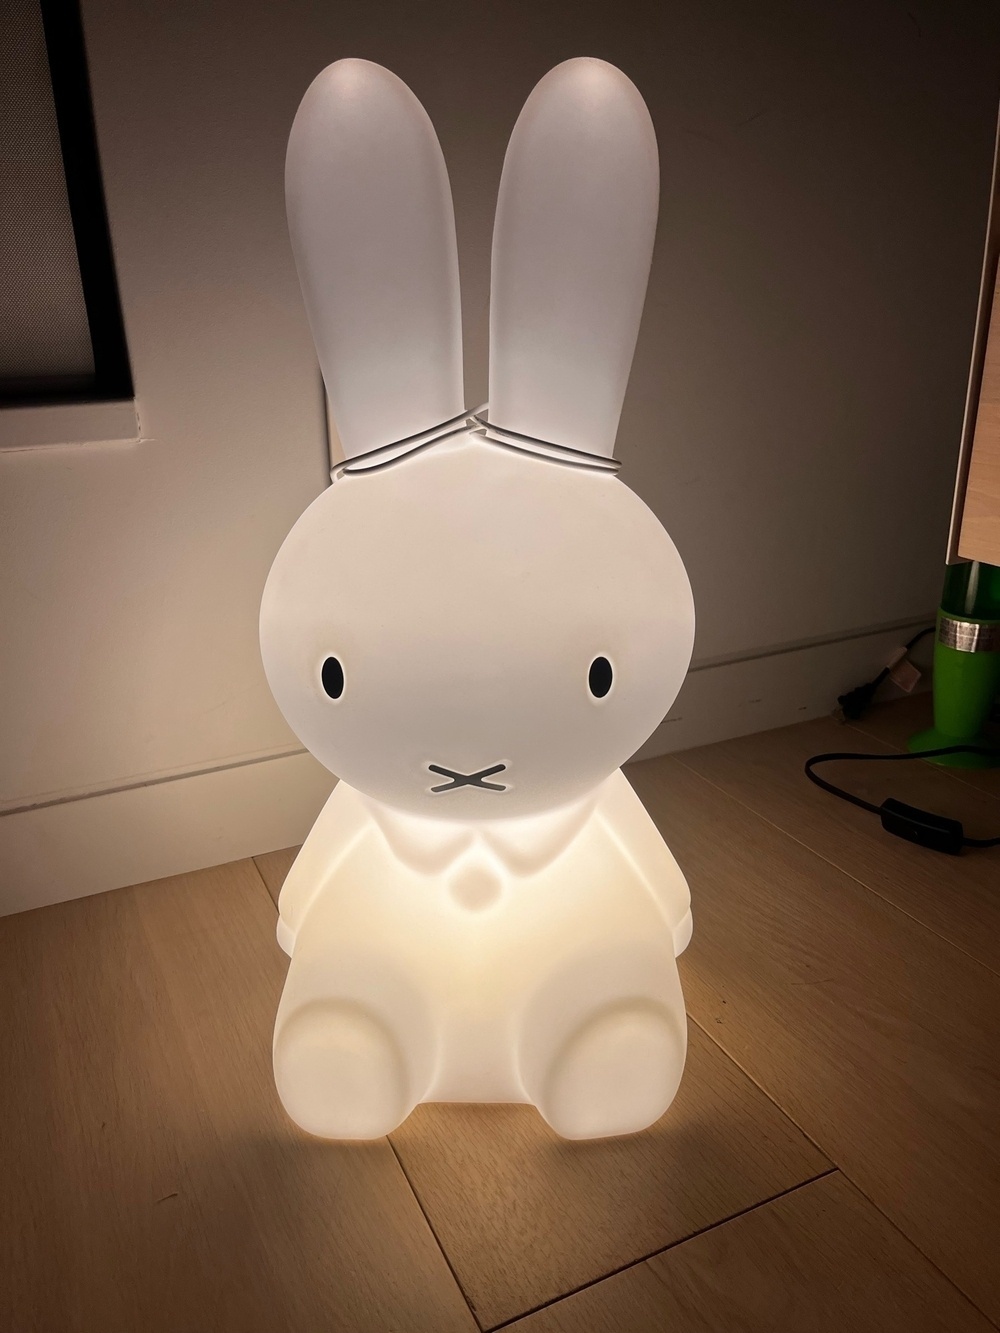 A children’s night light looking like Miffy, a fictional rabbit